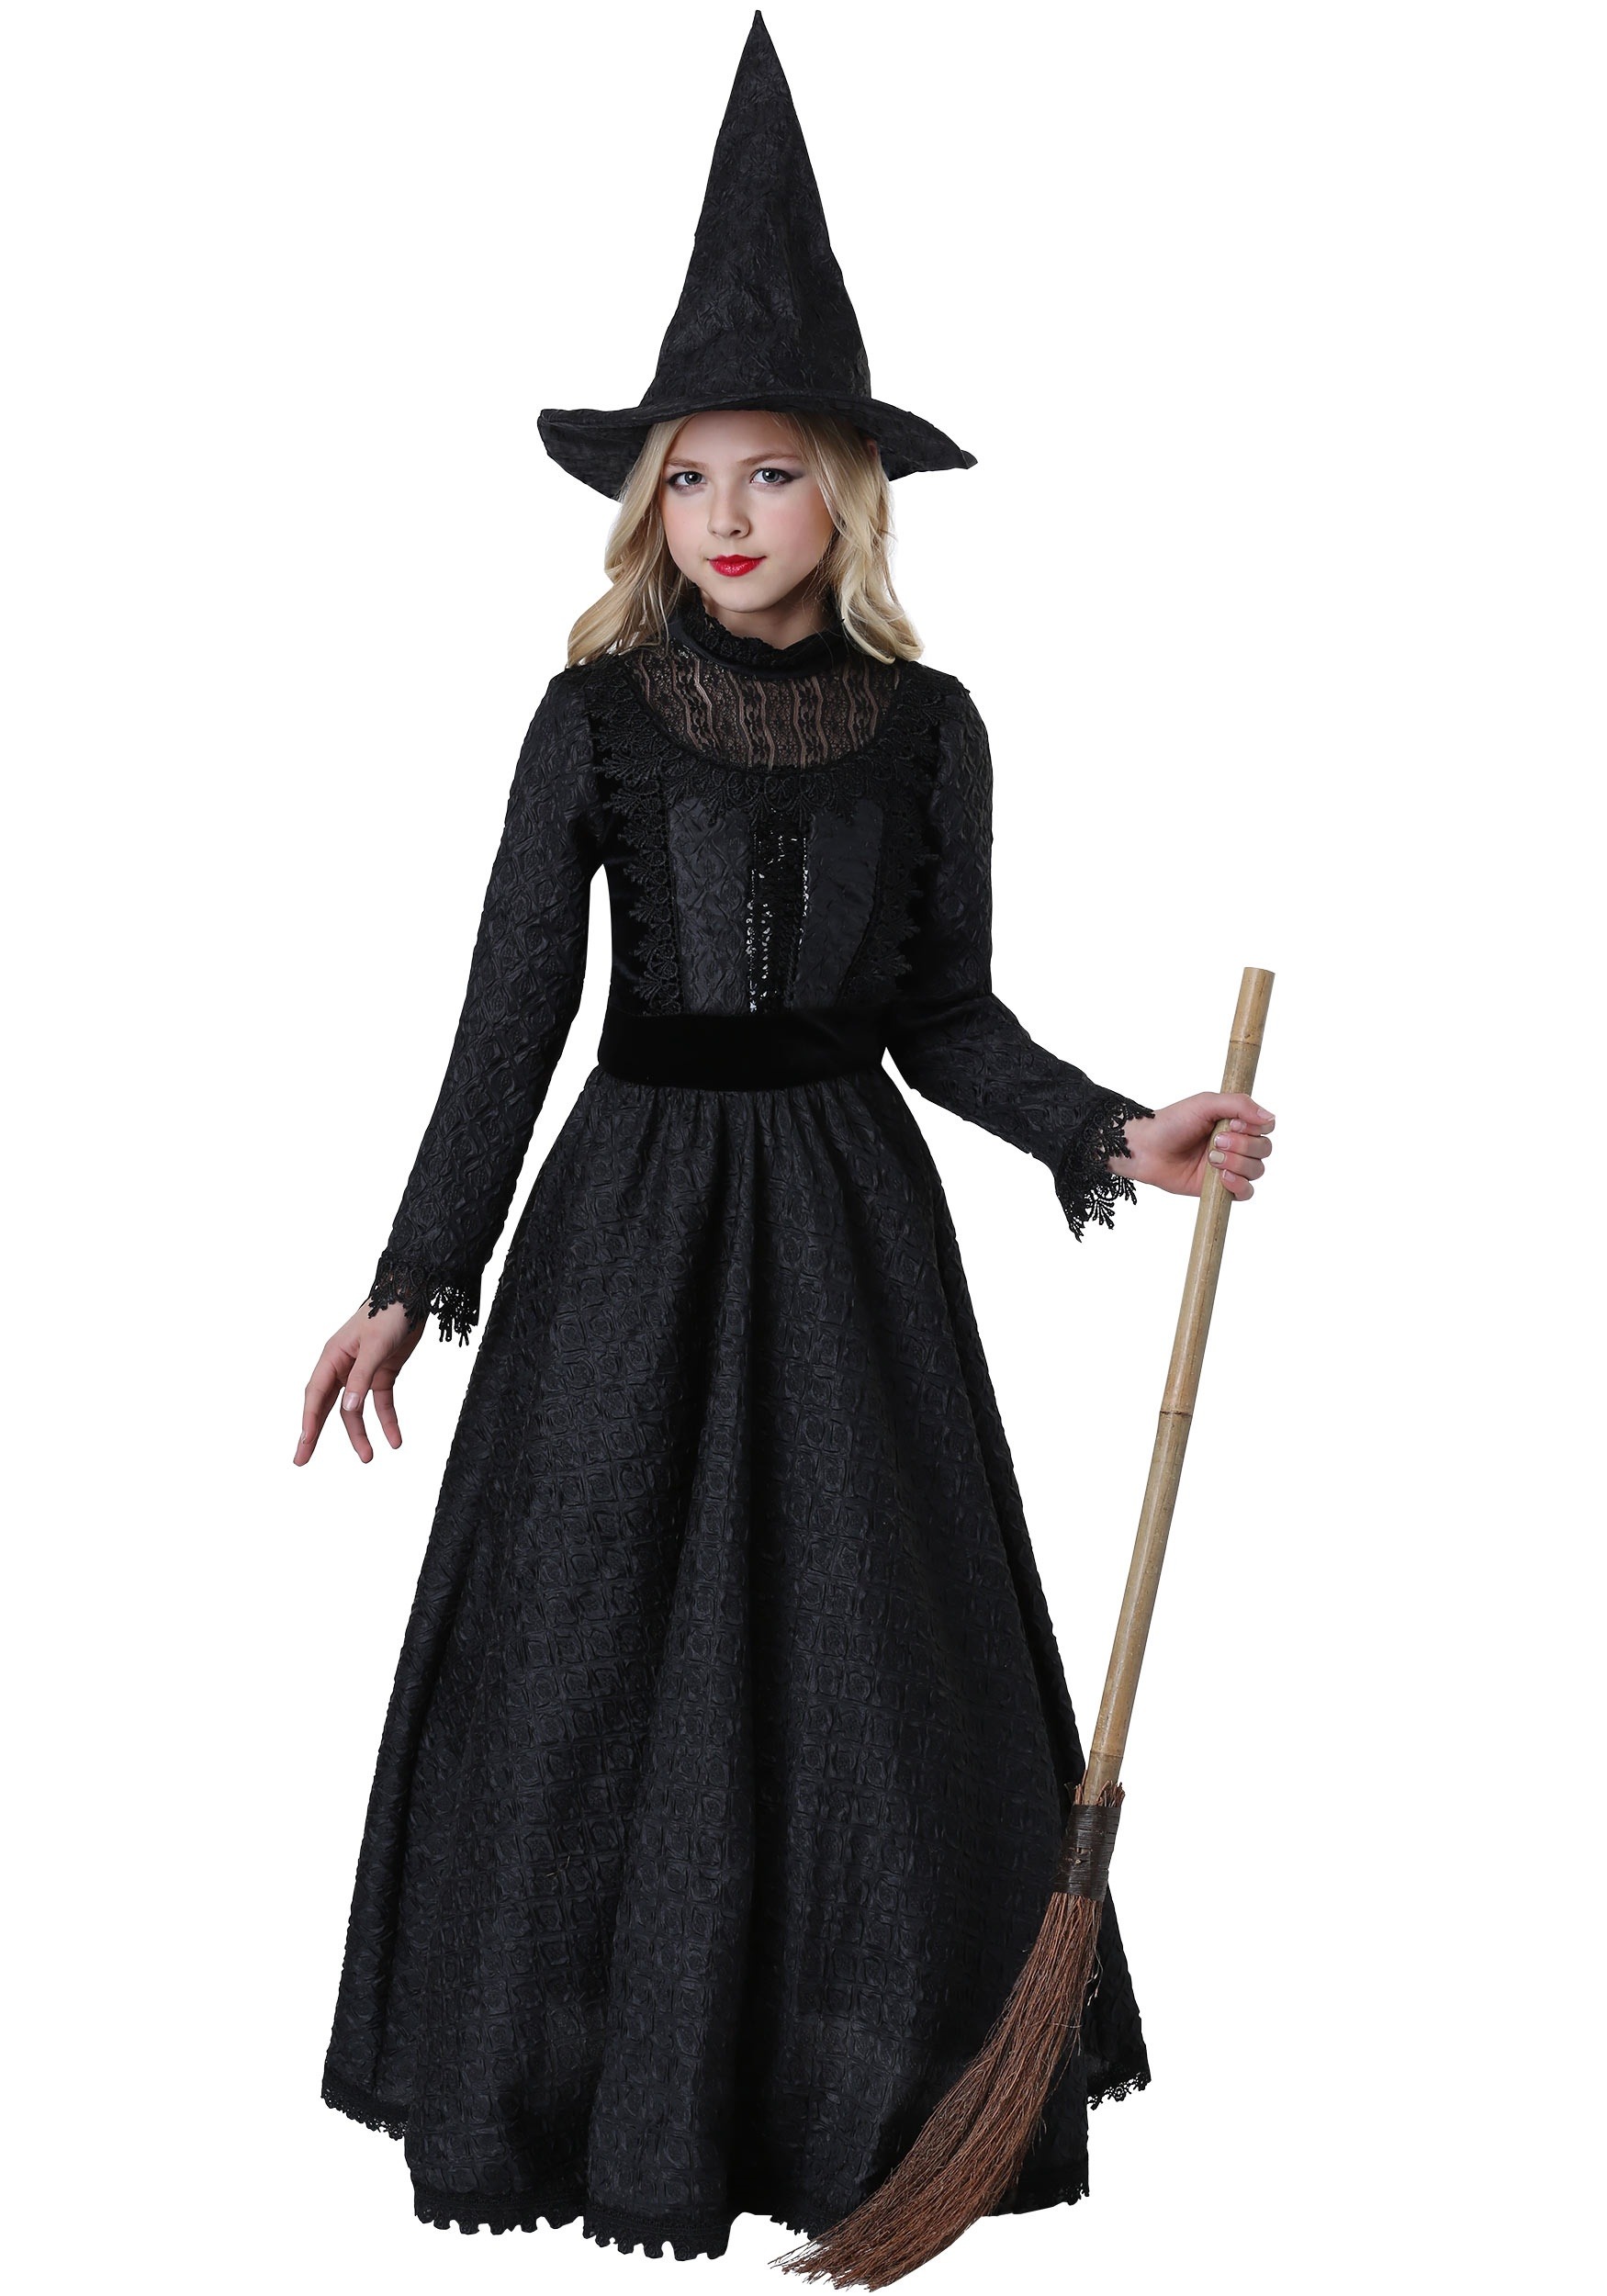 Girls Deluxe Dark Witch Costume